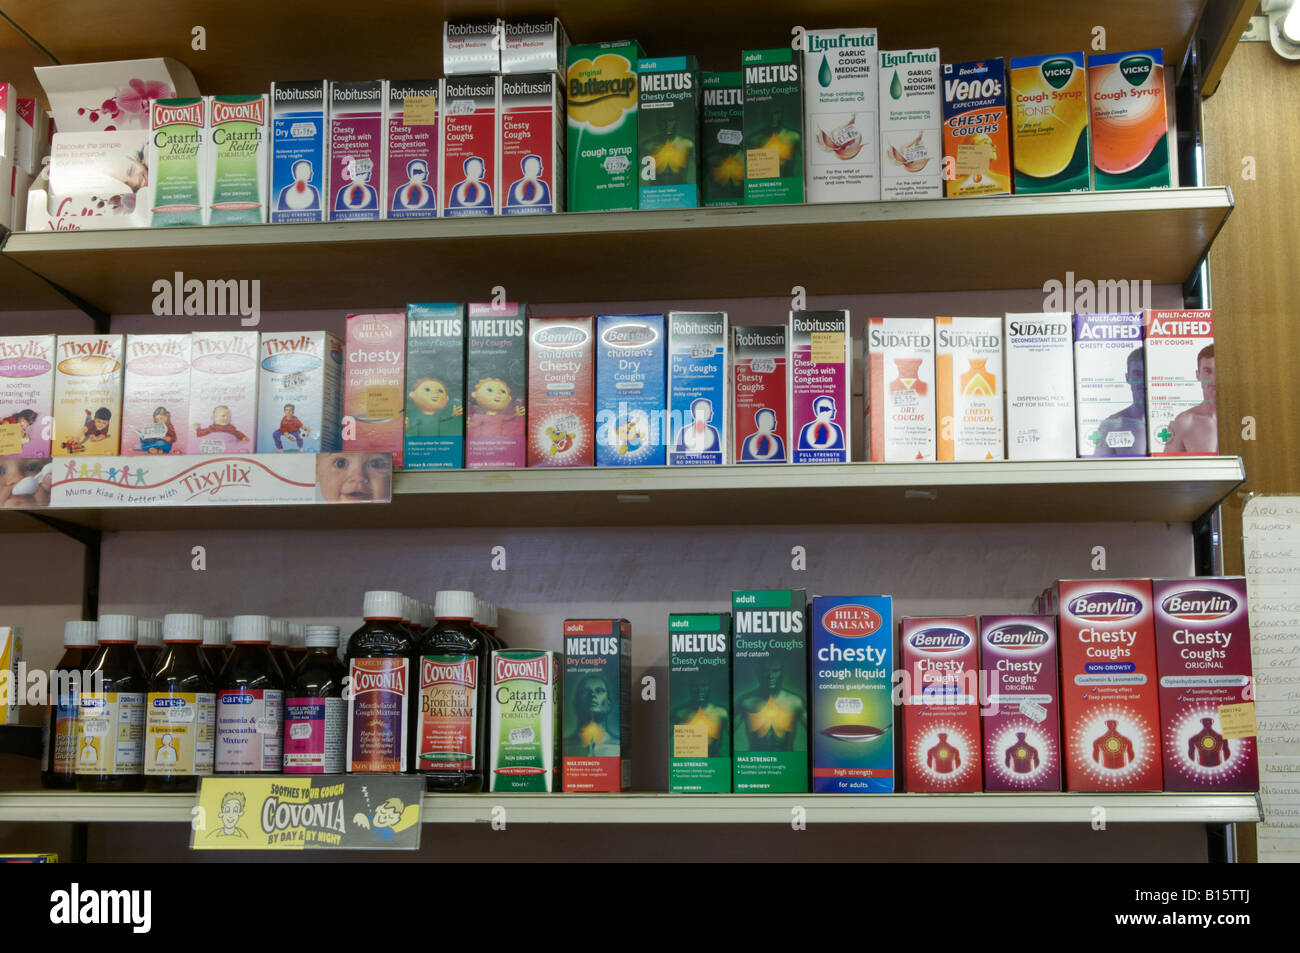 Medicine shelf in a chemists shop Stock Photo - Alamy